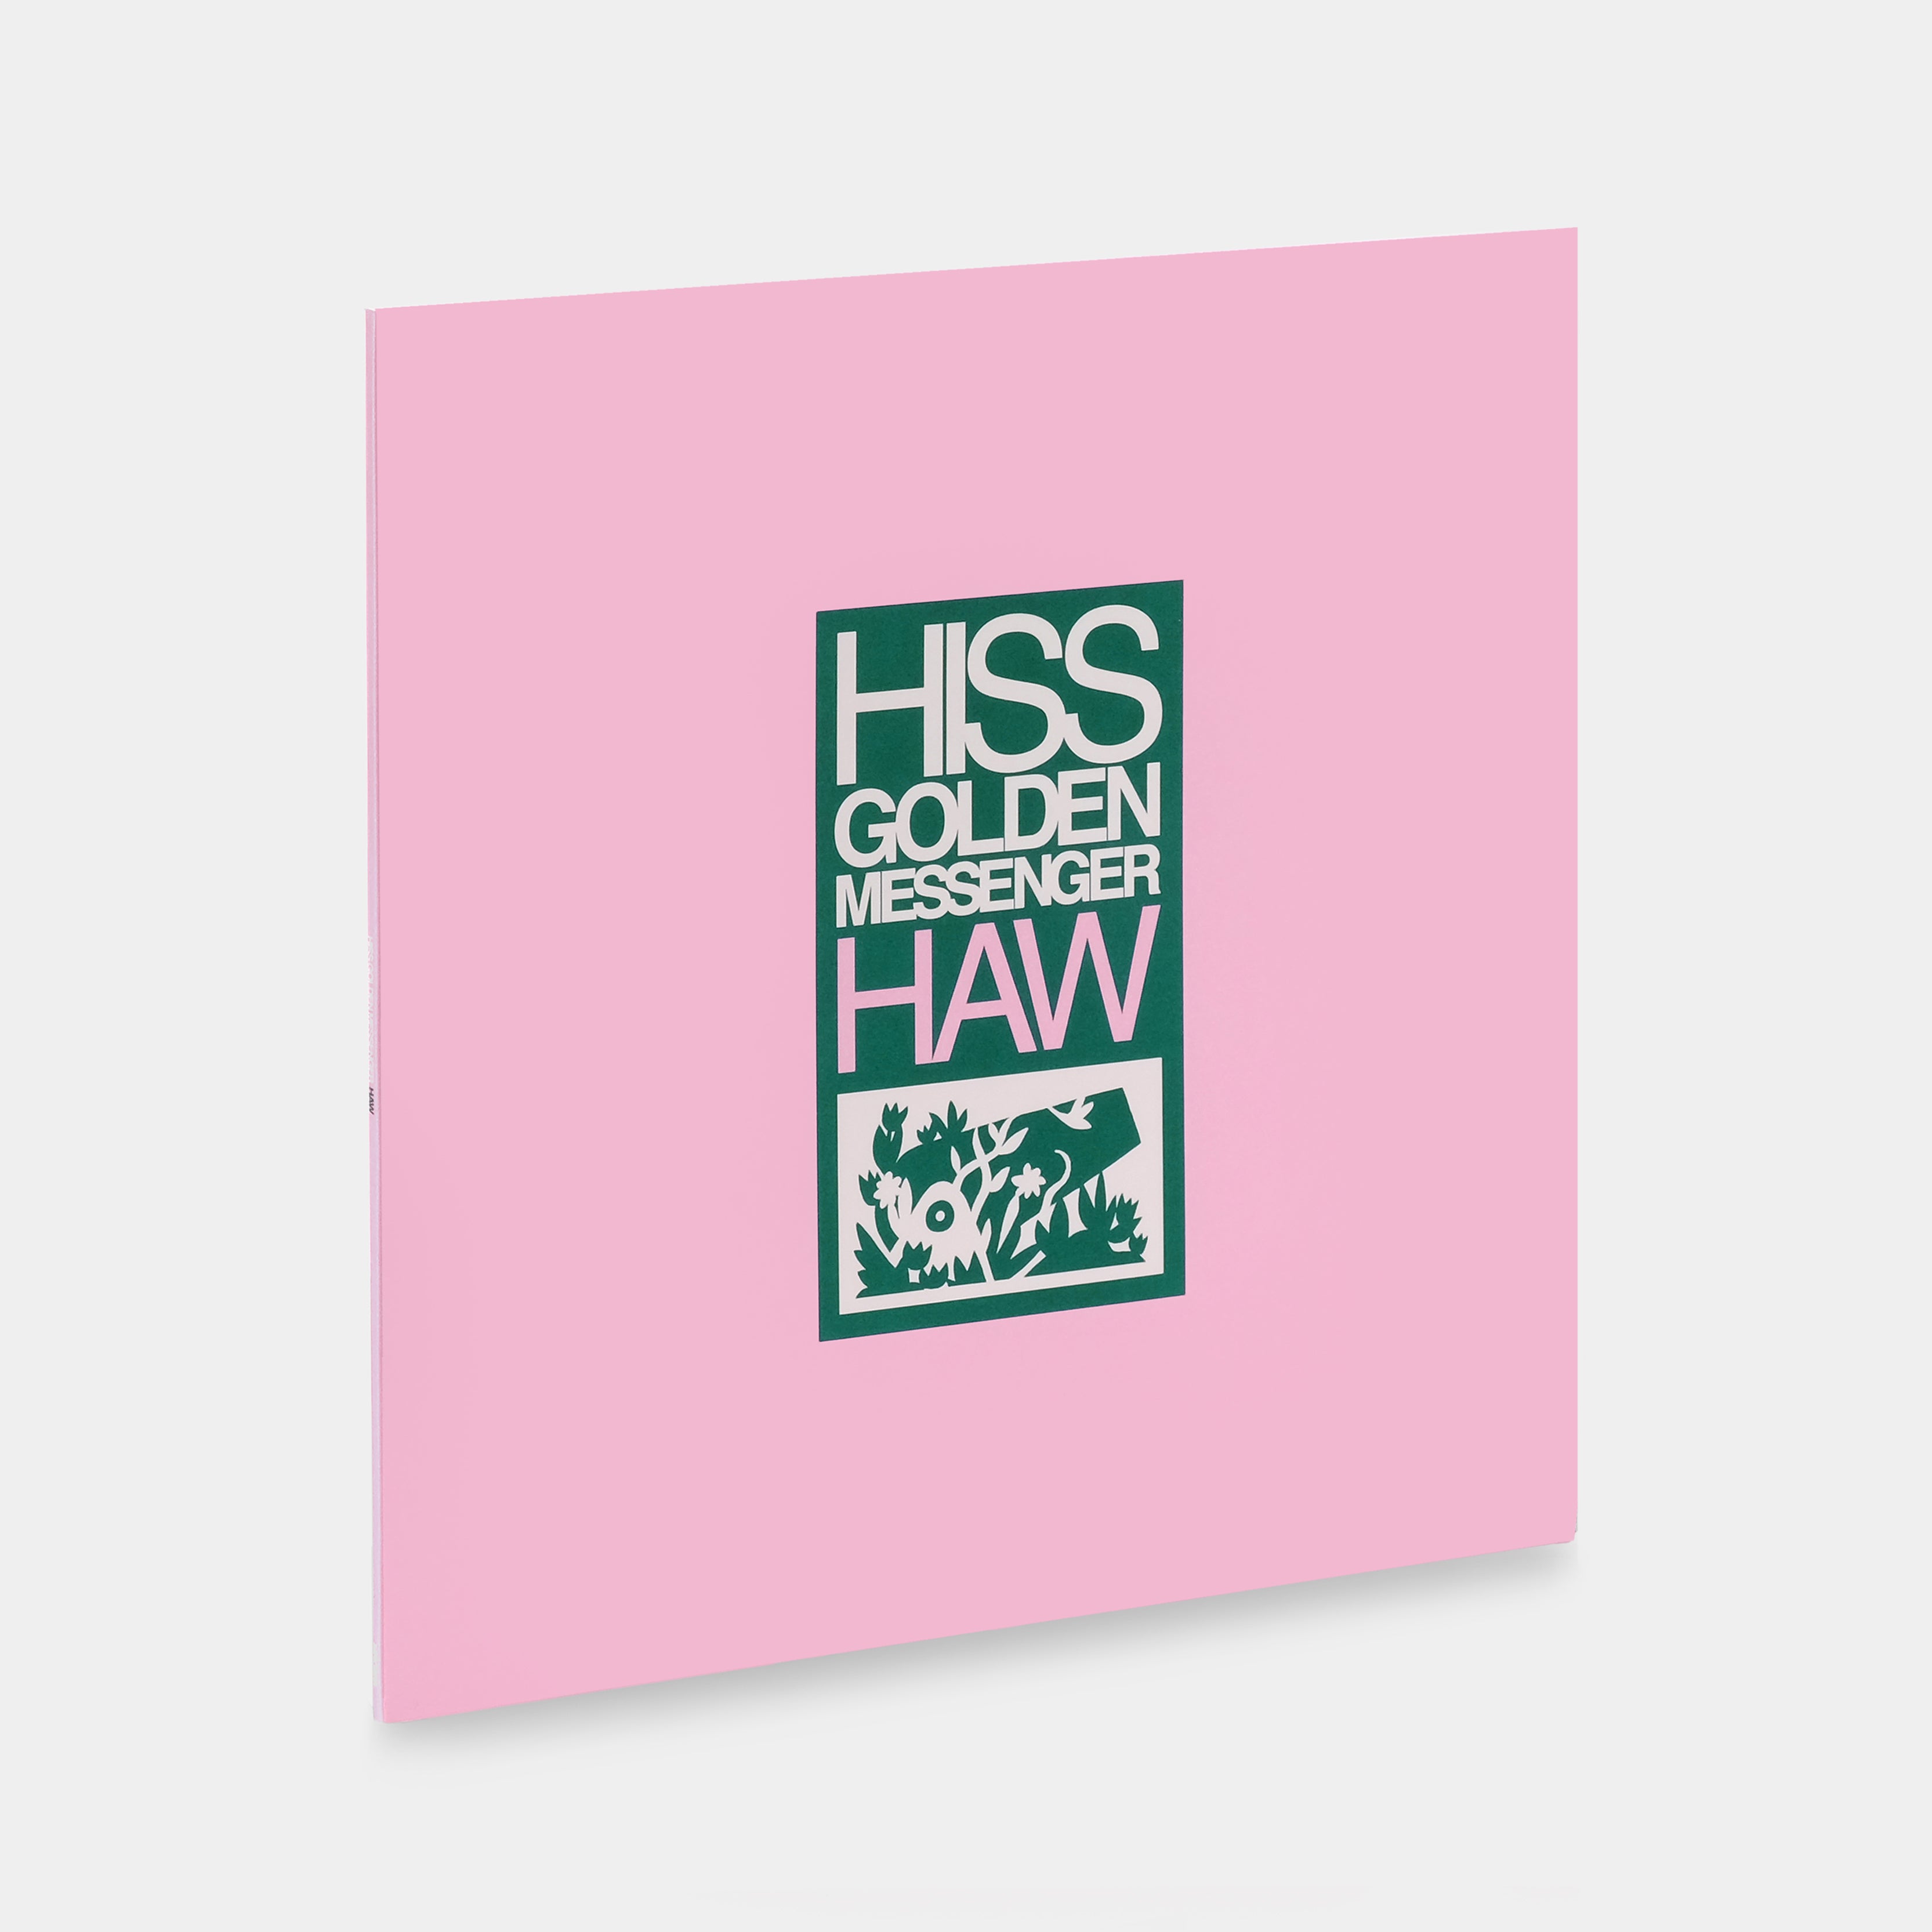 Hiss Golden Messenger - Haw LP Vinyl Record